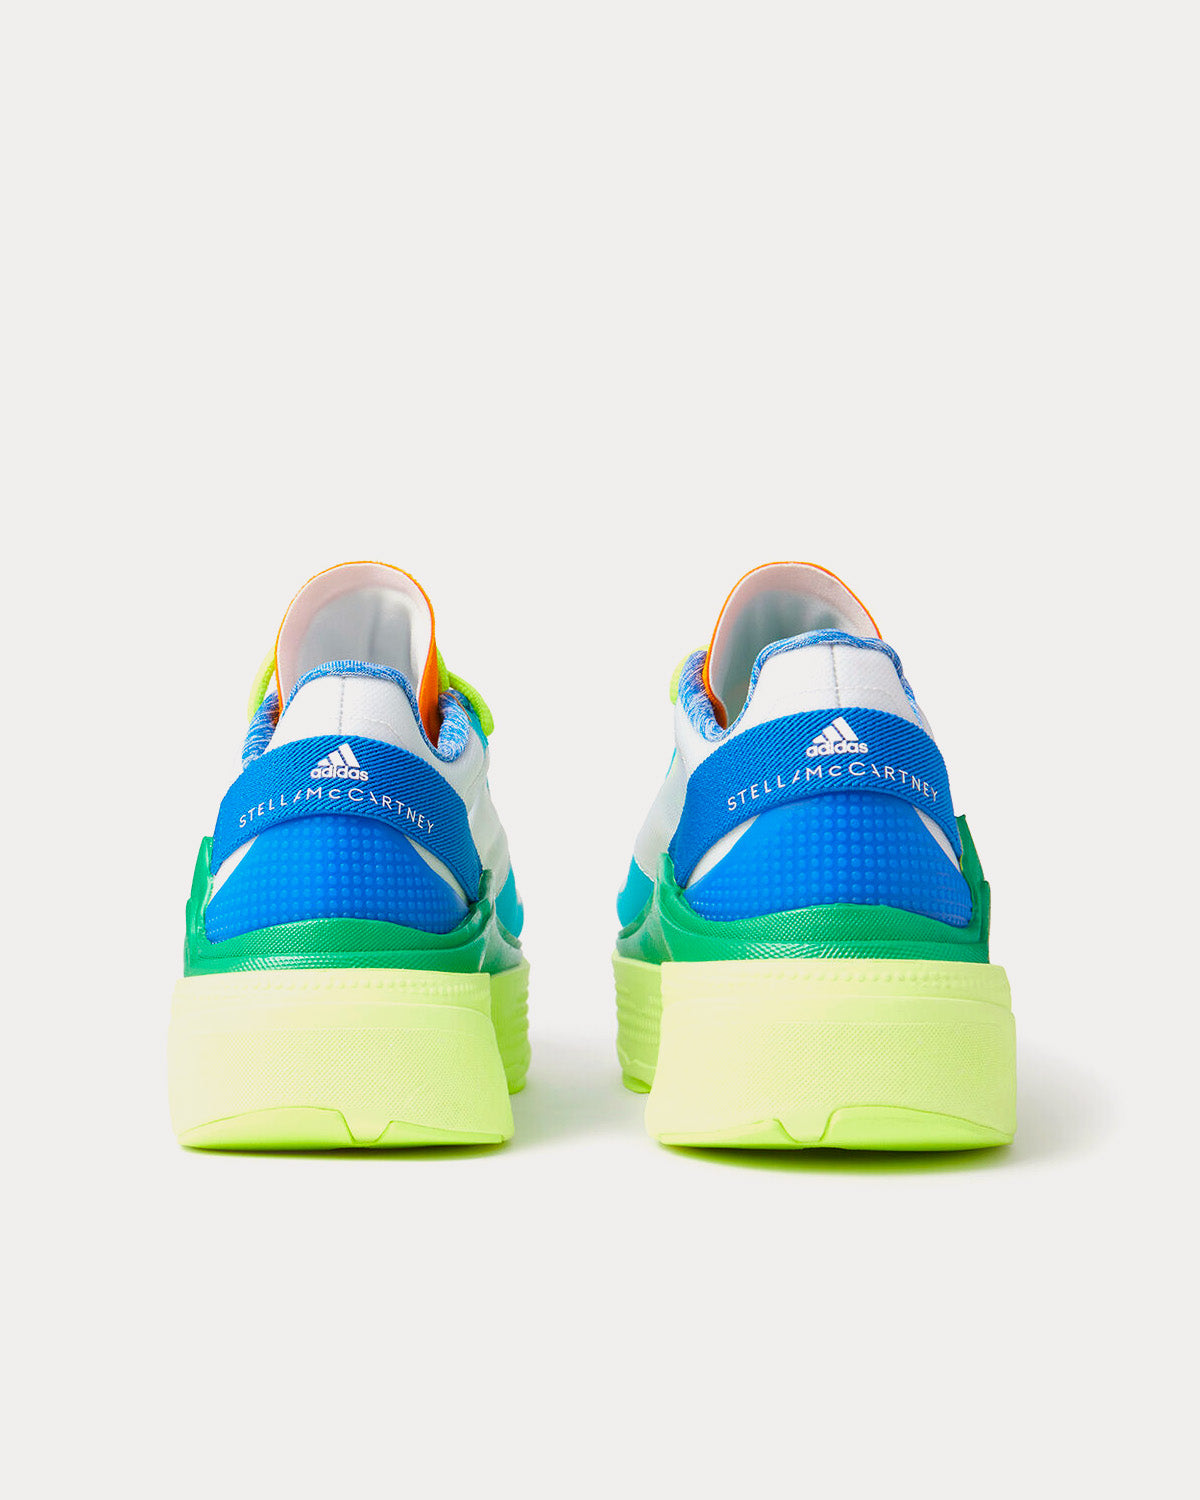 Adidas X Stella McCartney - Earthlight White / Rich Green / Solar Yellow Running Shoes